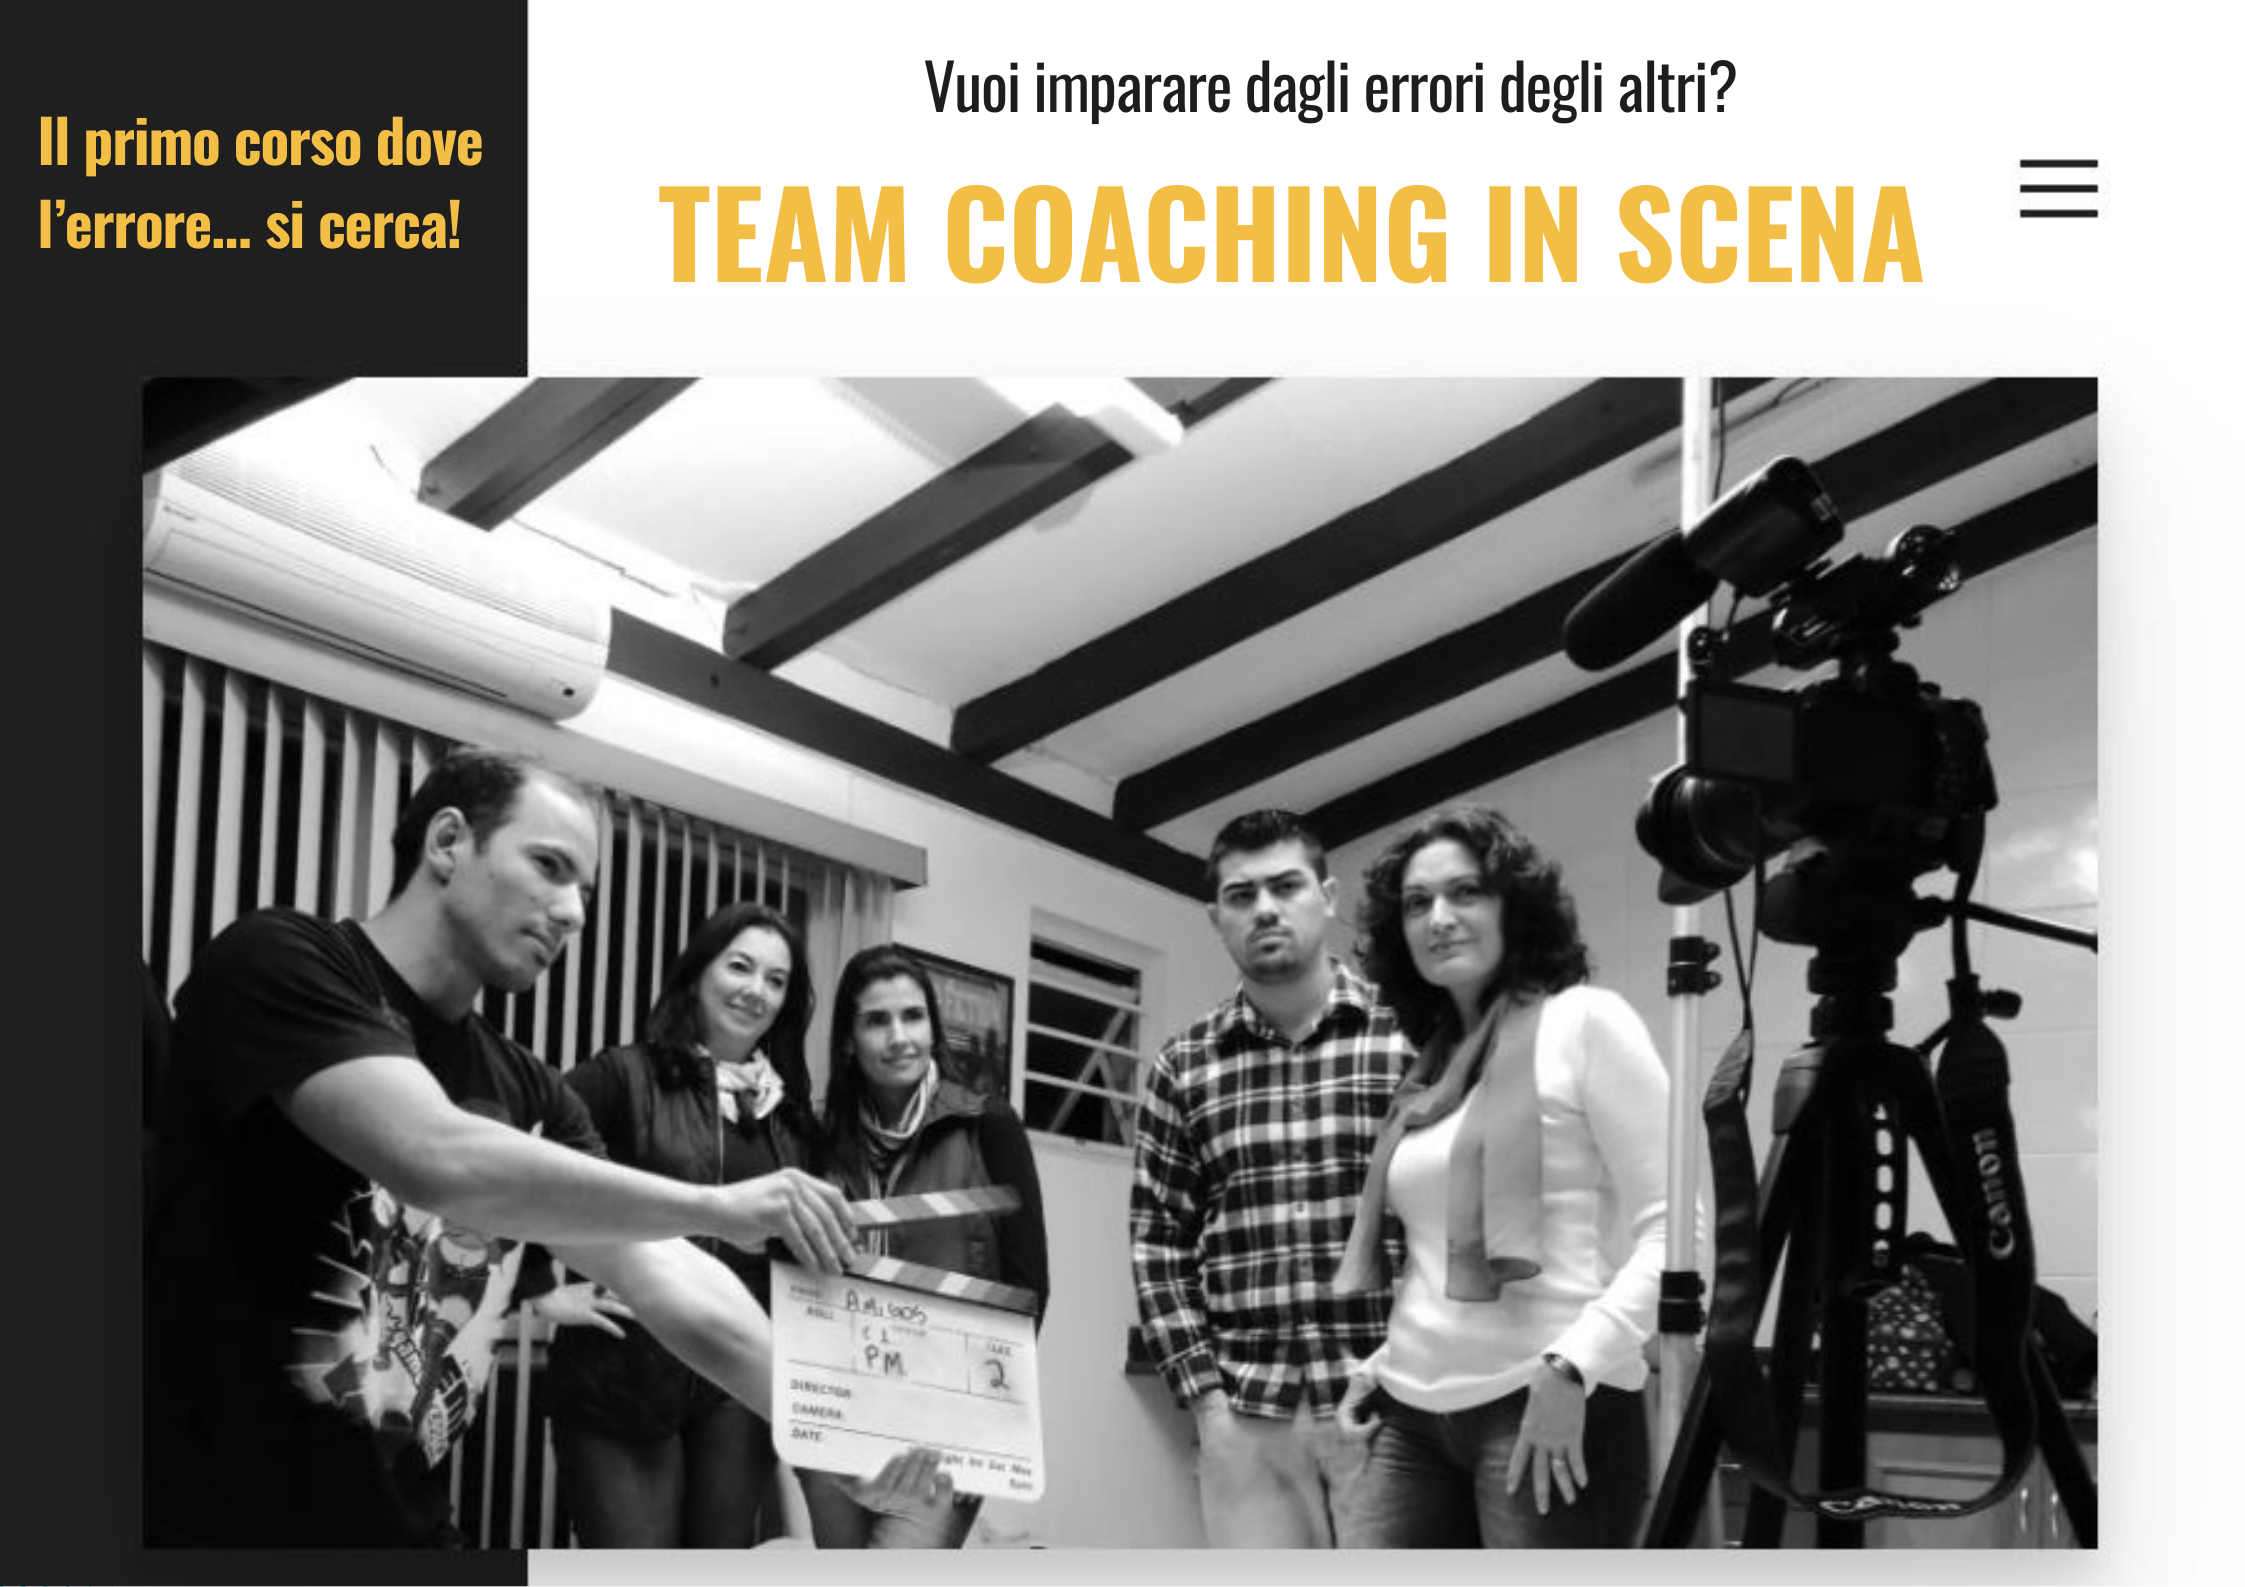 Team Coaching in scena